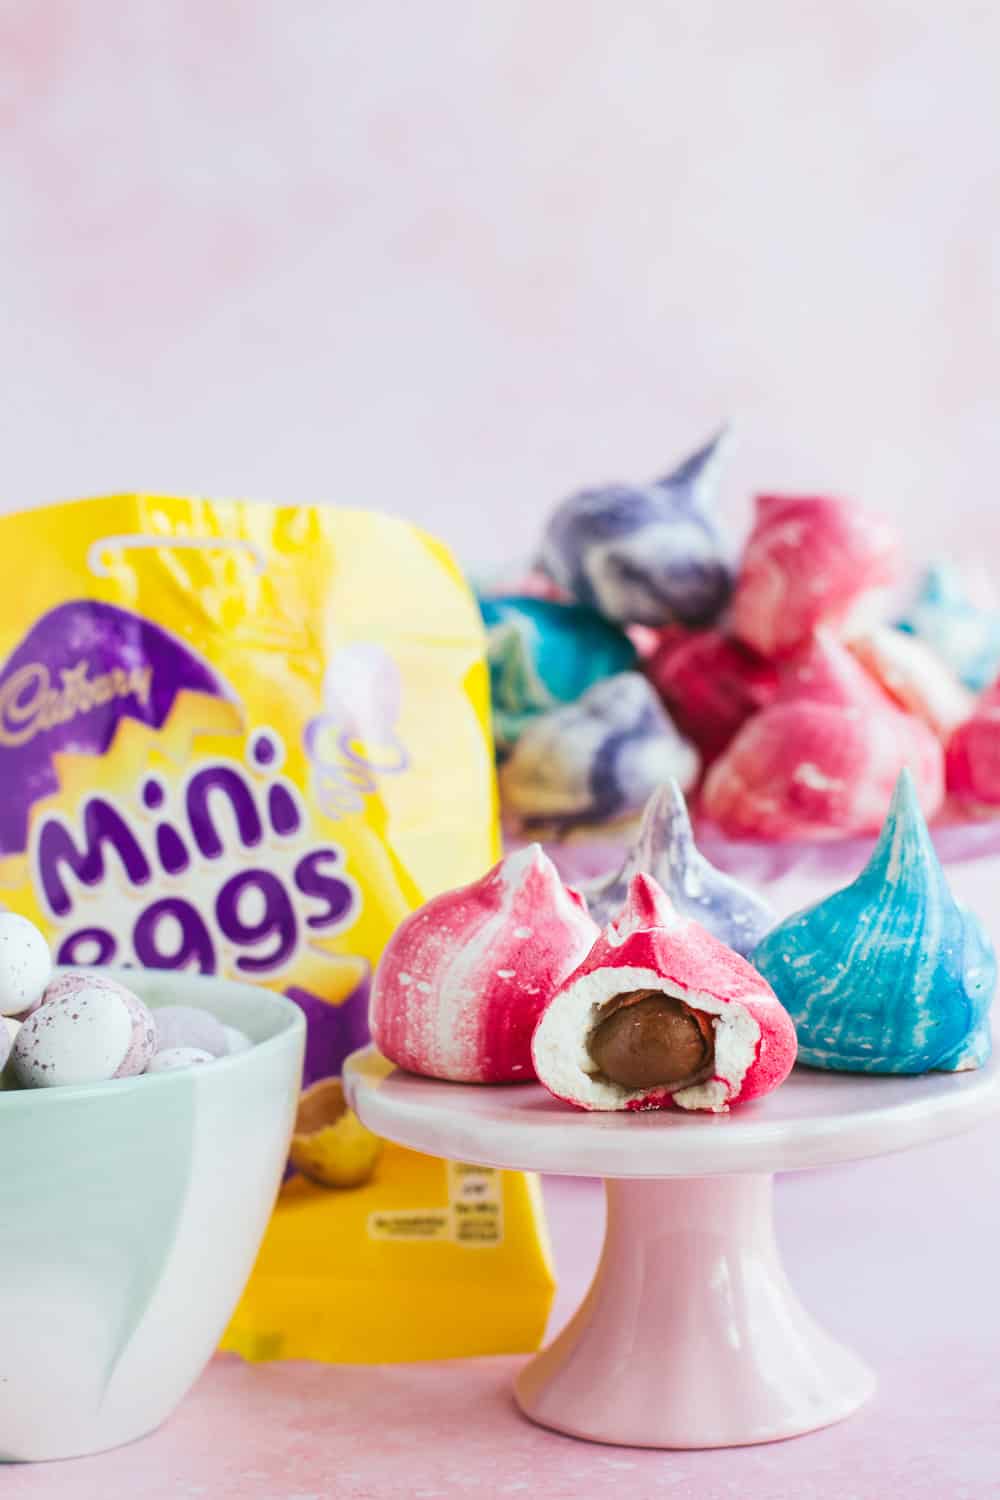 Mini meringues with mini eggs inside